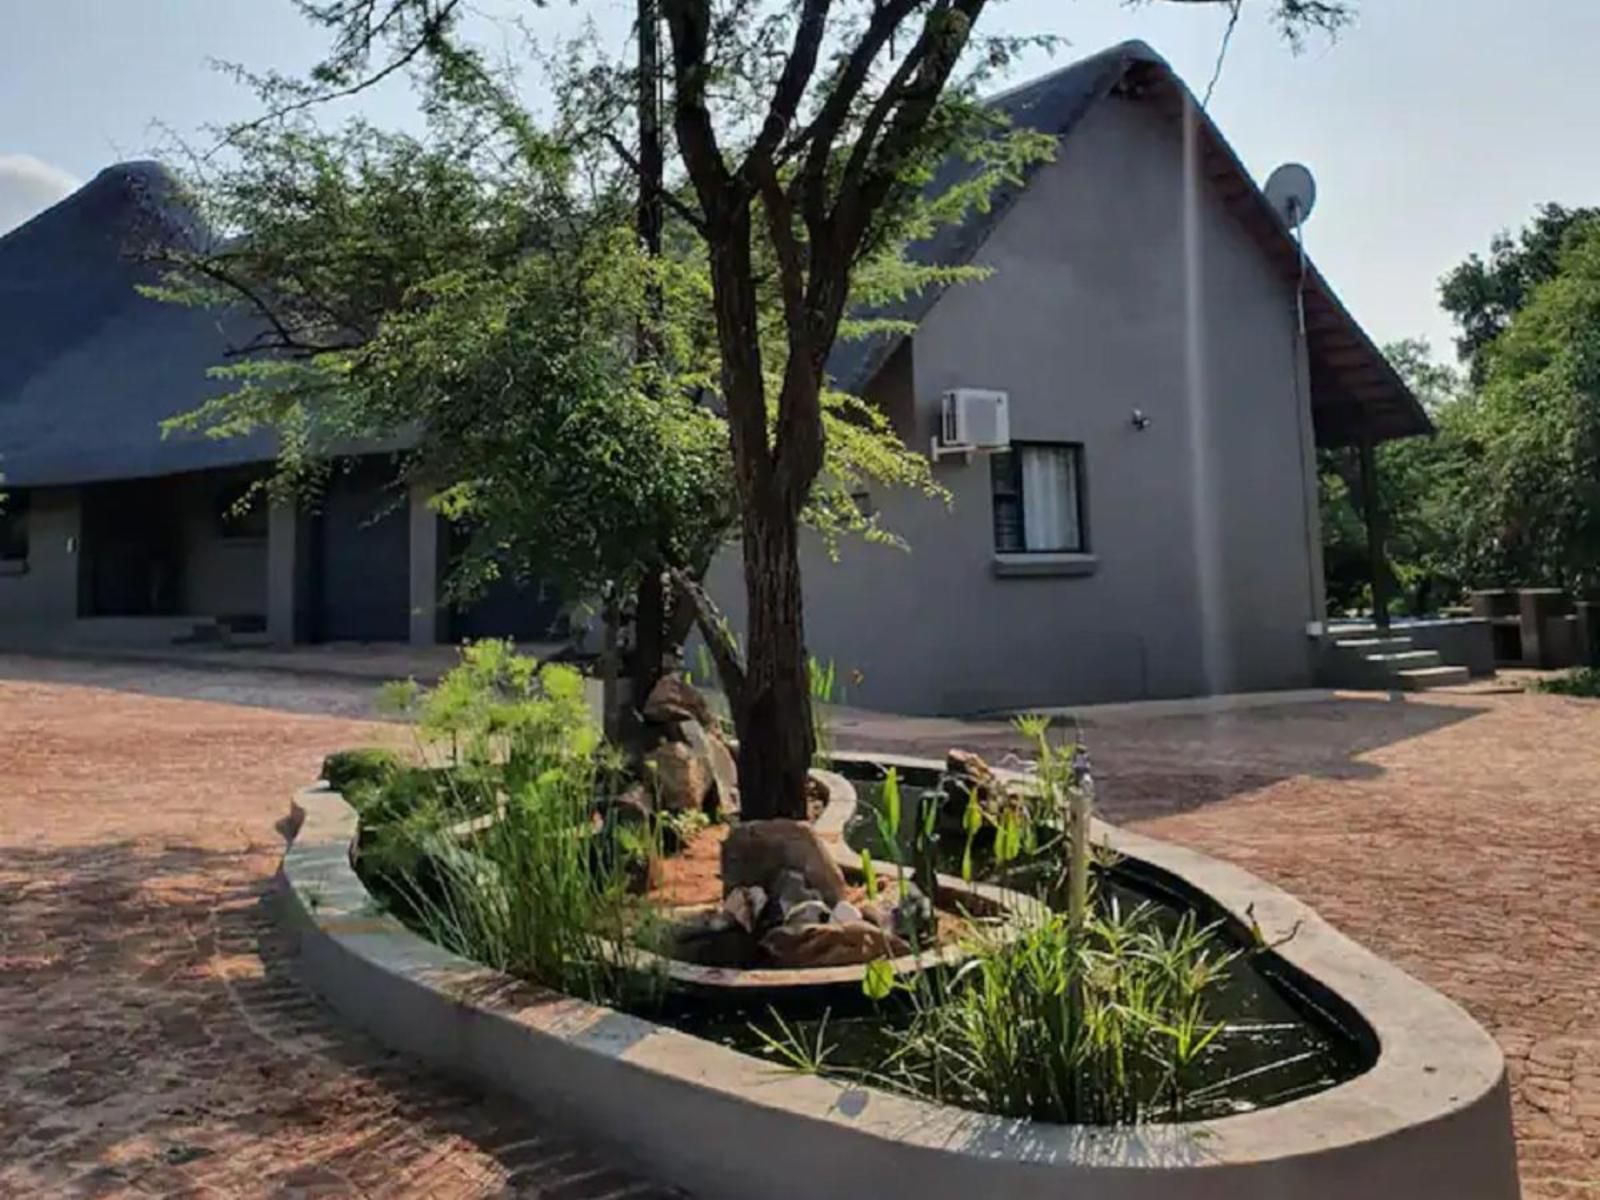 Kanimambo Main Lodge Marloth Park Mpumalanga South Africa House, Building, Architecture, Garden, Nature, Plant